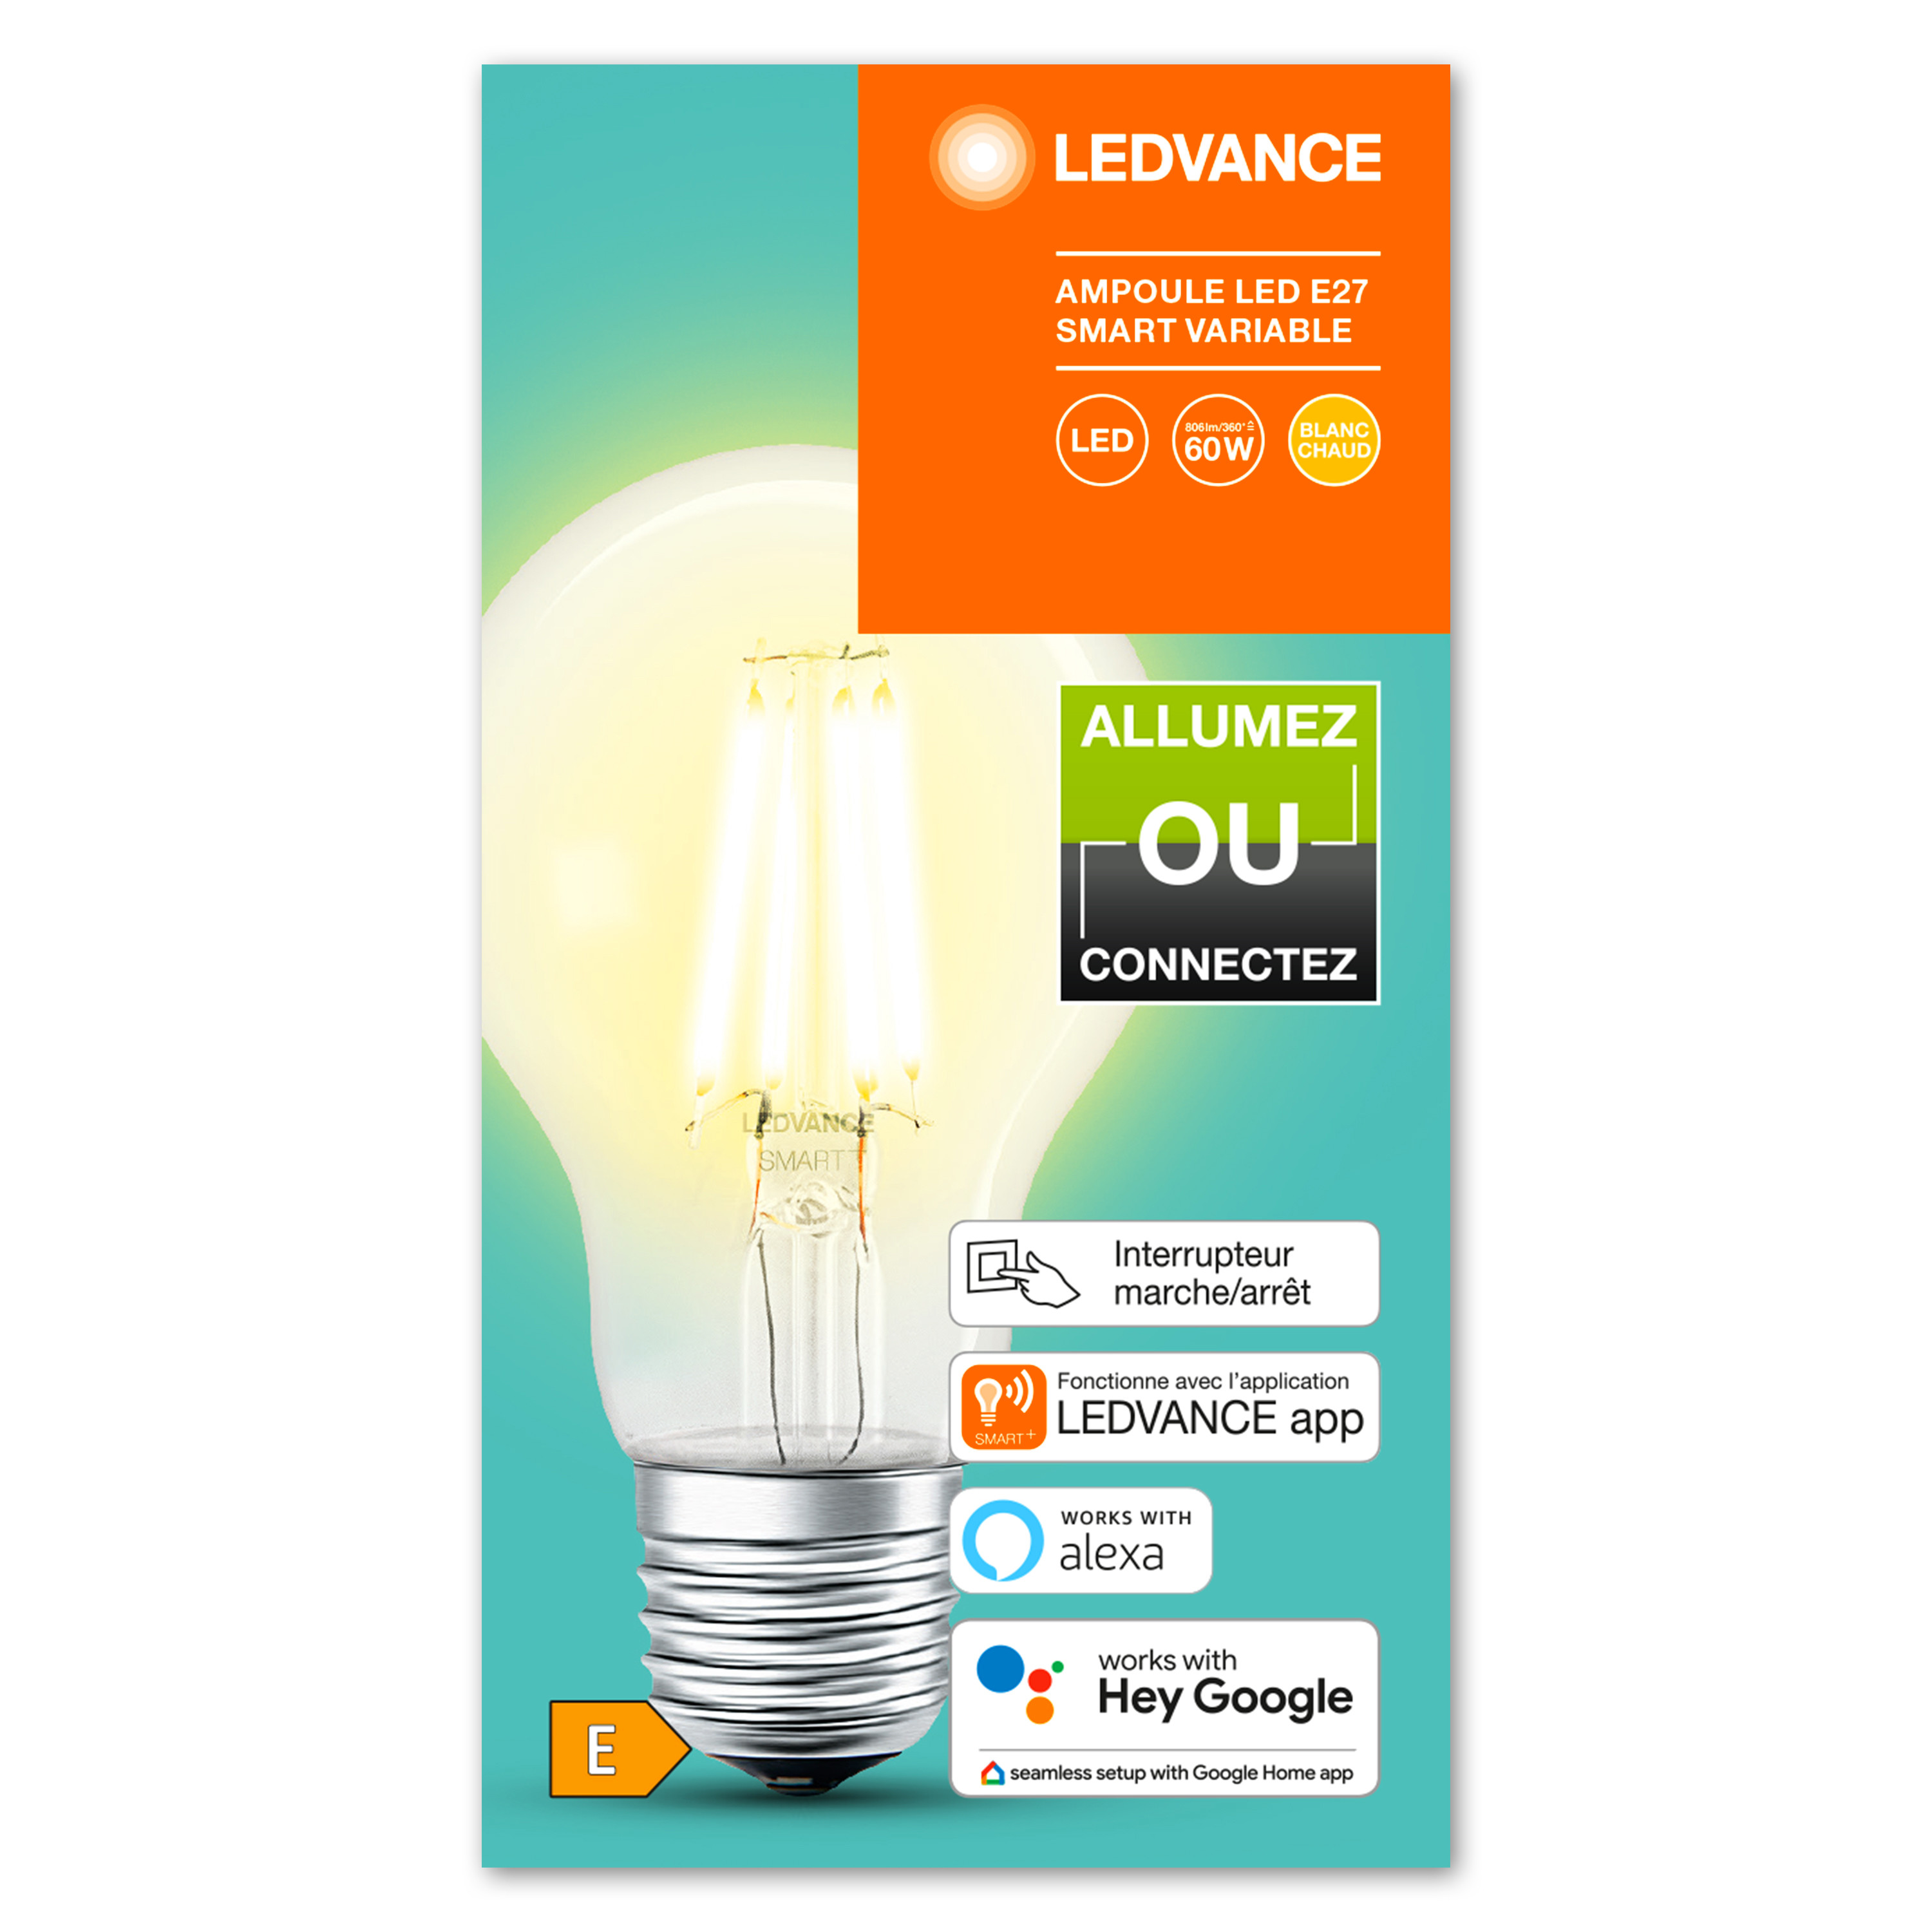 LEDVANCE VOLKSLICHT SMART+ Filament LED 608 Lumen Classic Warmweiß Dimmable Lampe